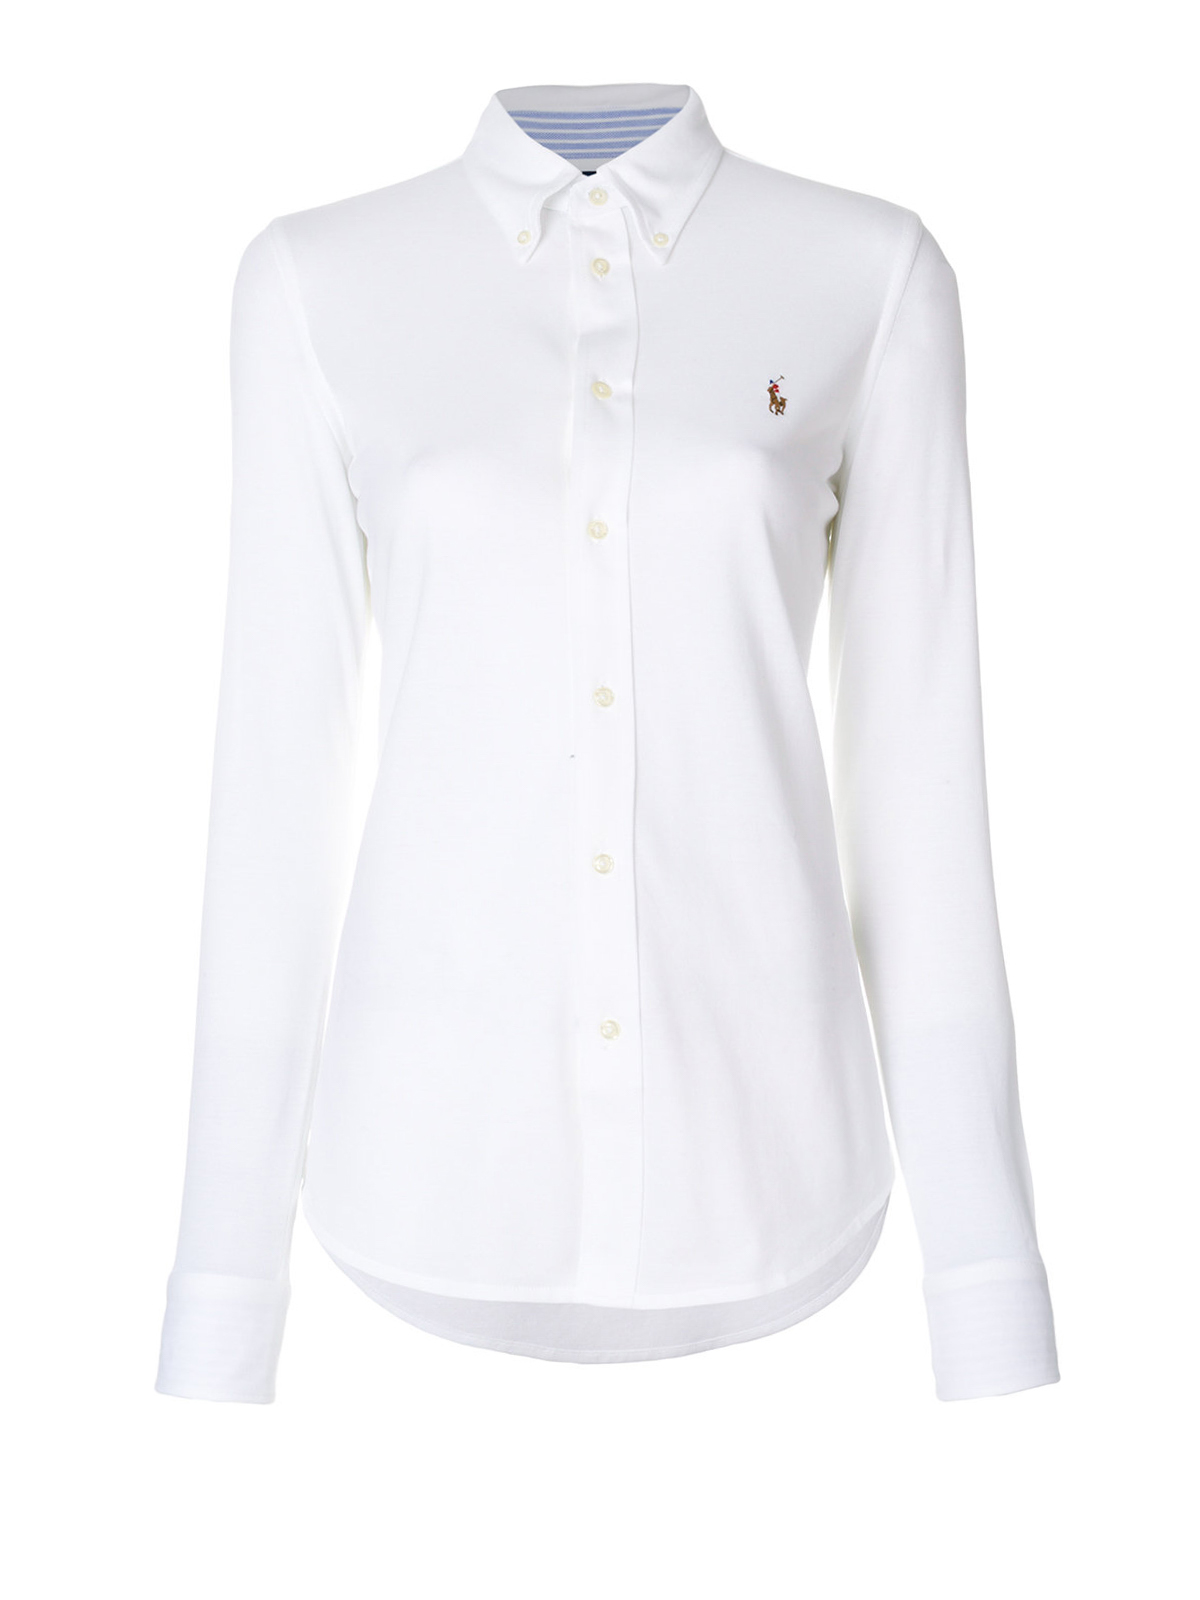 Polo Ralph Lauren Button-down Oxford White Shirt